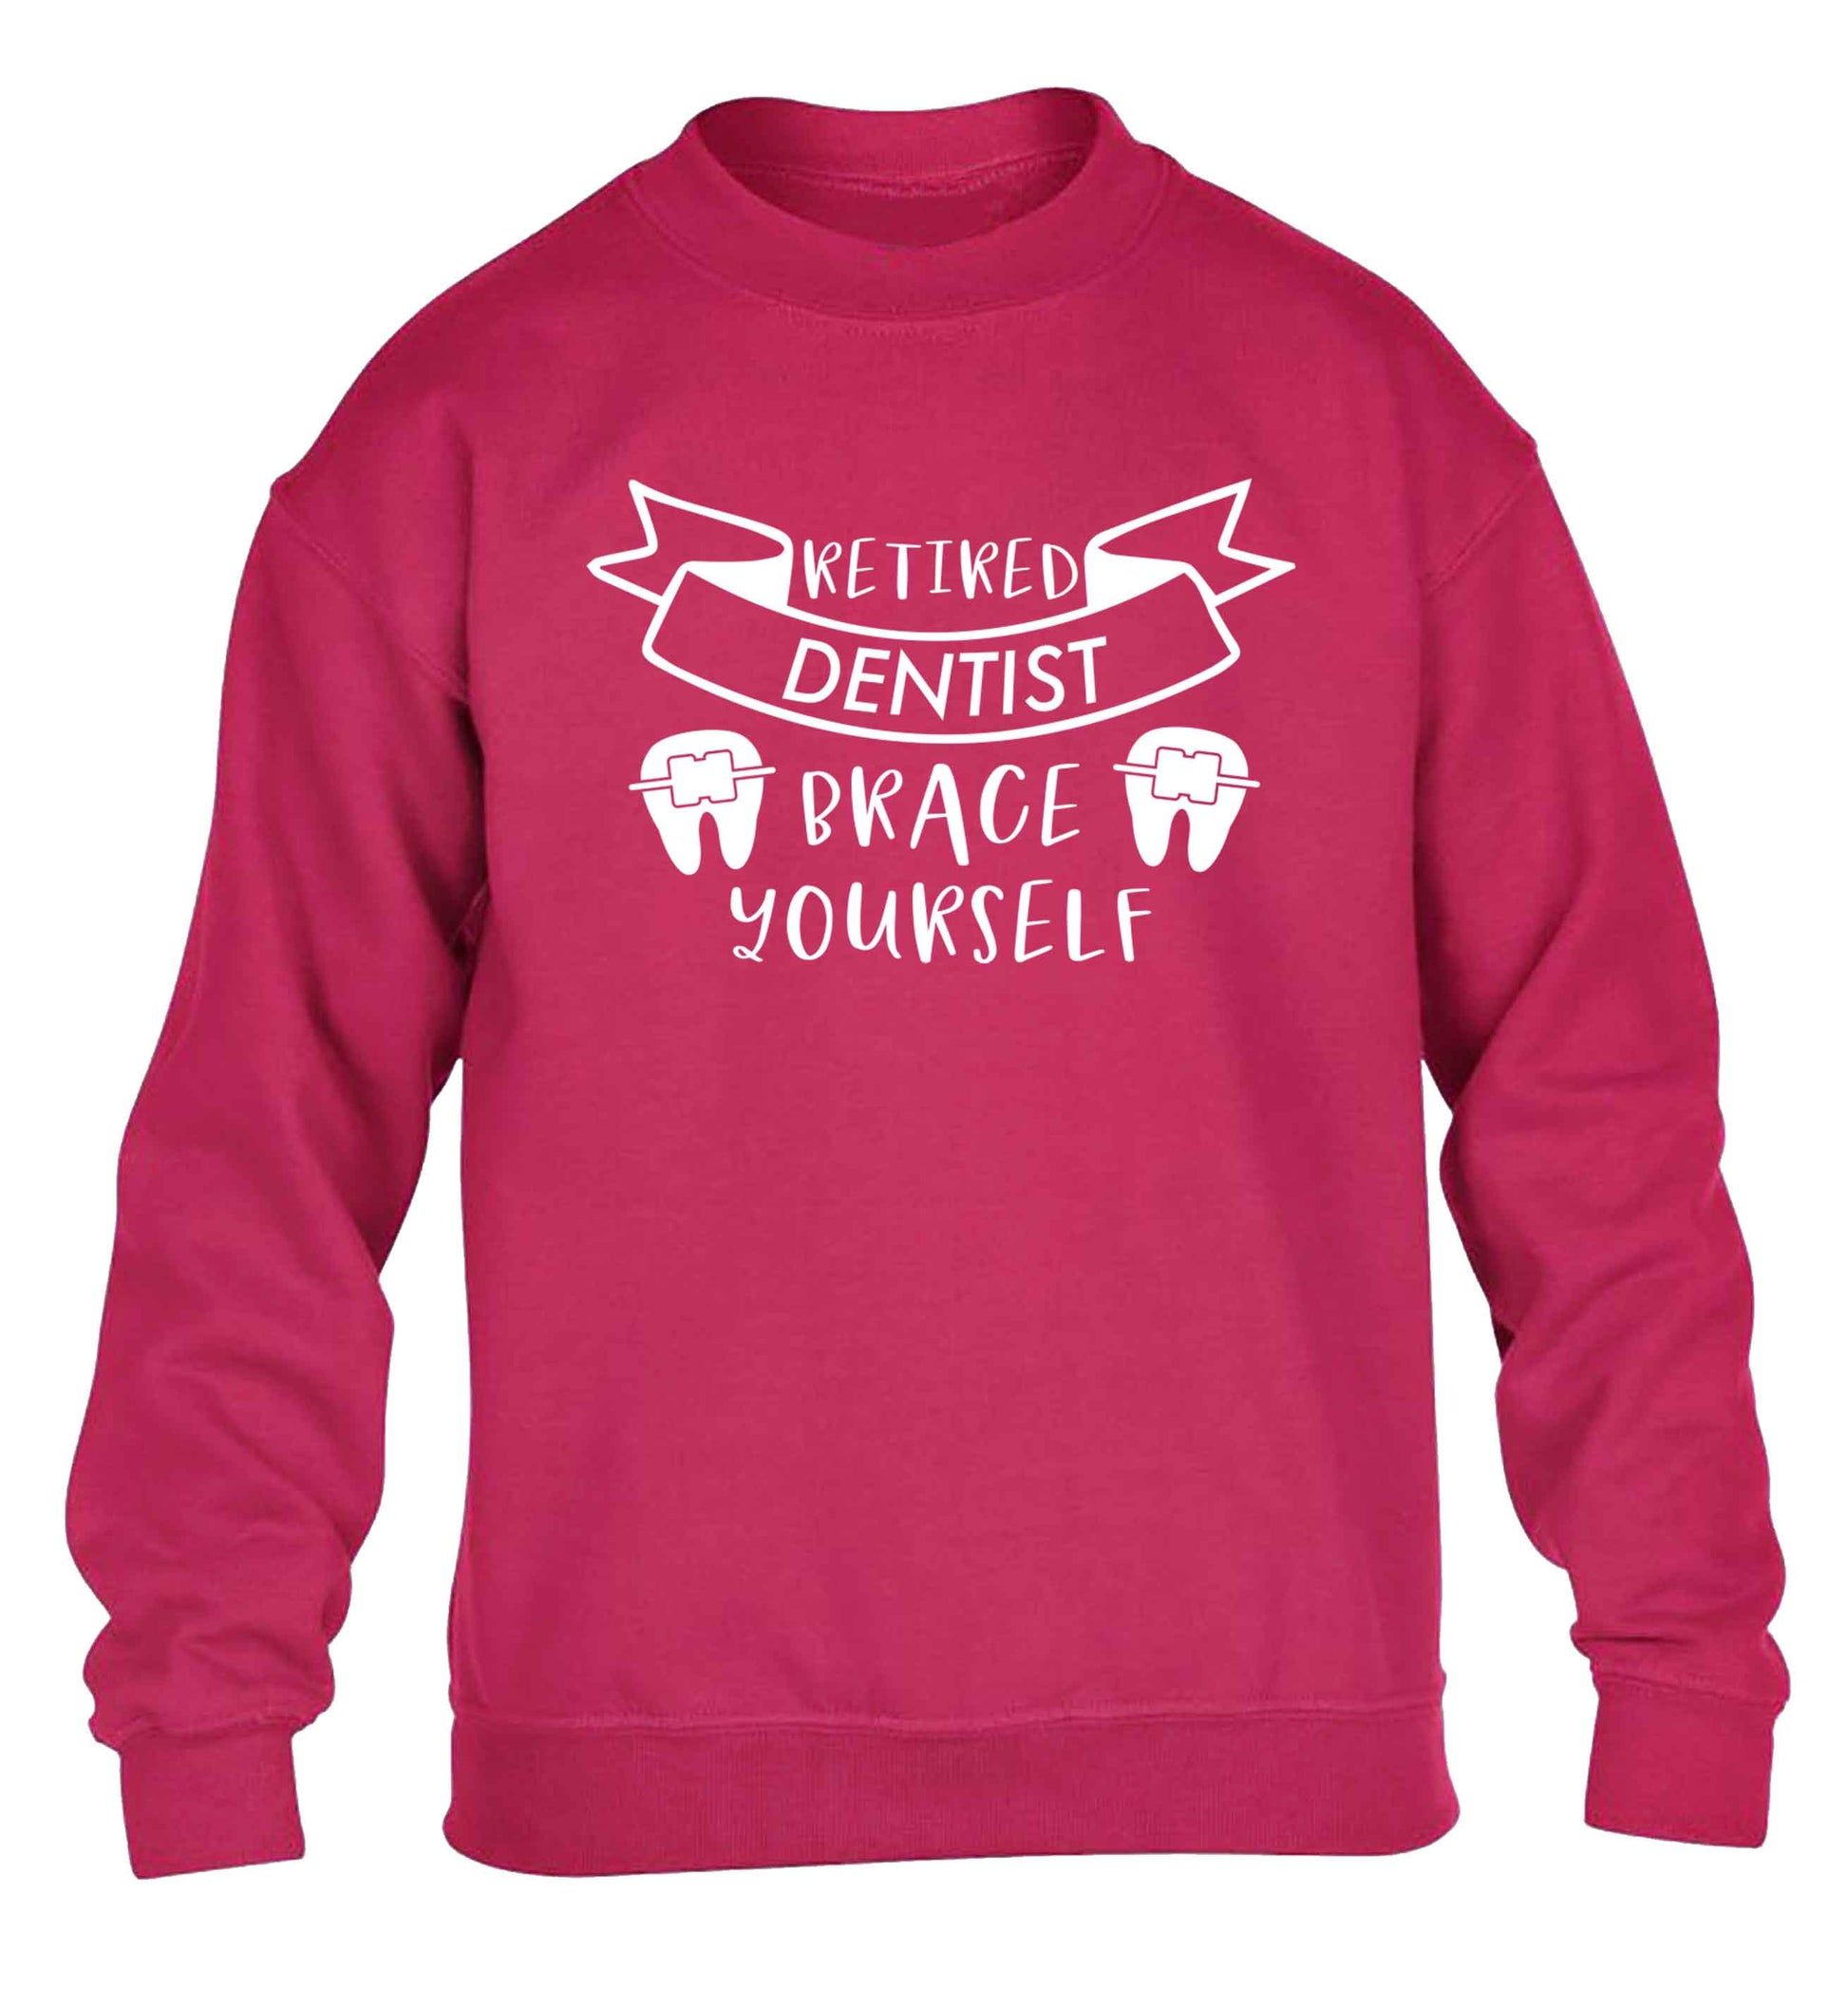 Retired dentist brace yourself children's pink sweater 12-13 Years